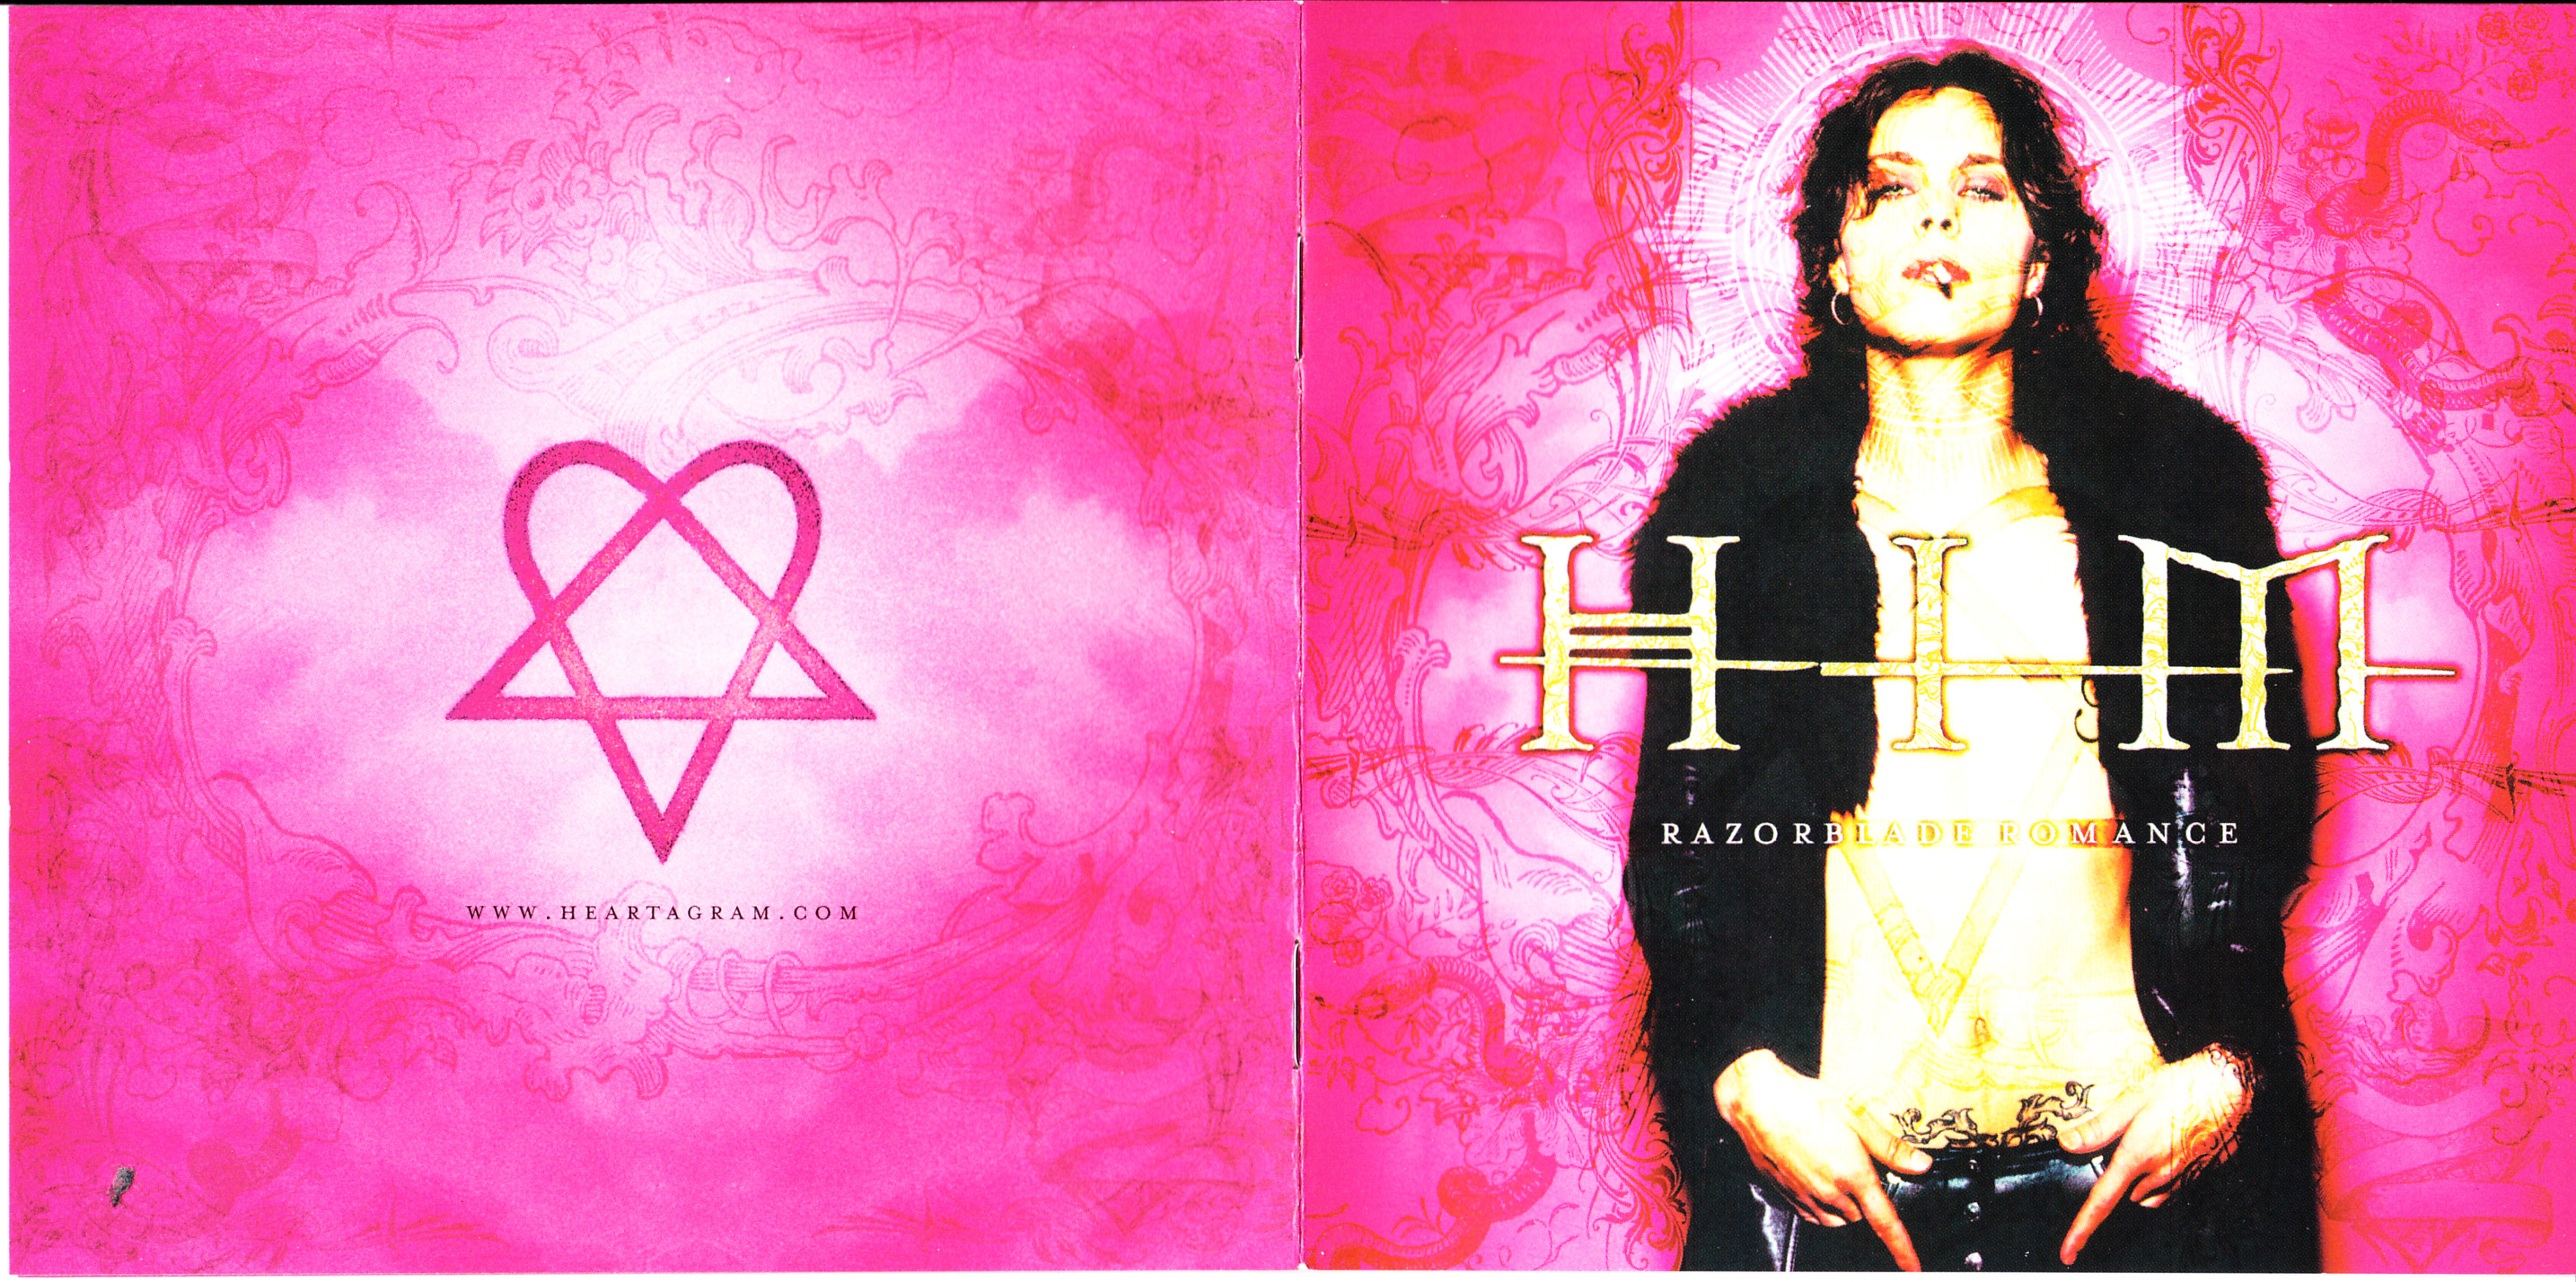 Альбом romance. Вилле Вало Razorblade Romance. Him альбом Razorblade Romance. Him 1999 2000 Razorblade Romance. Him Razorblade Romance (1999) обложка.